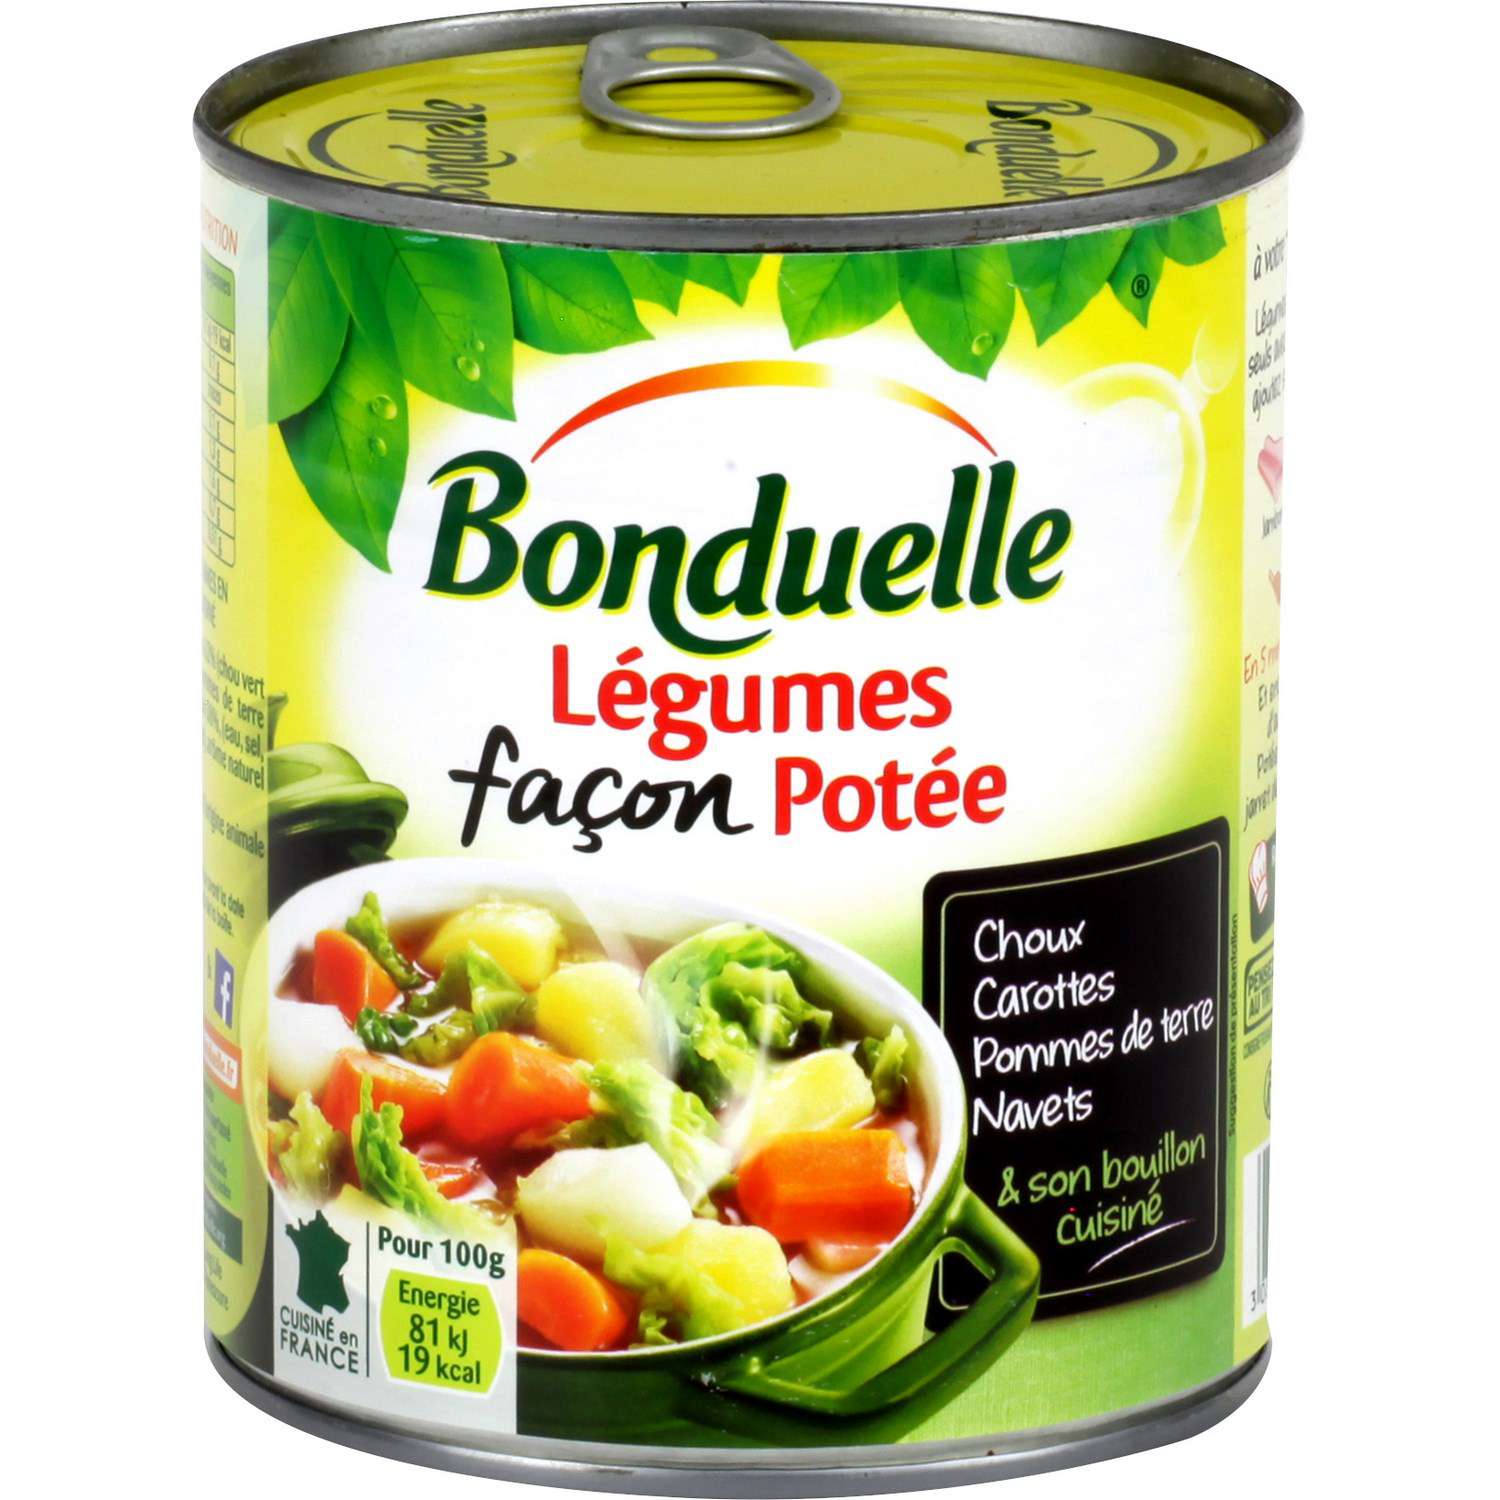 Bonduelle Vegetable Facon Potee 800g